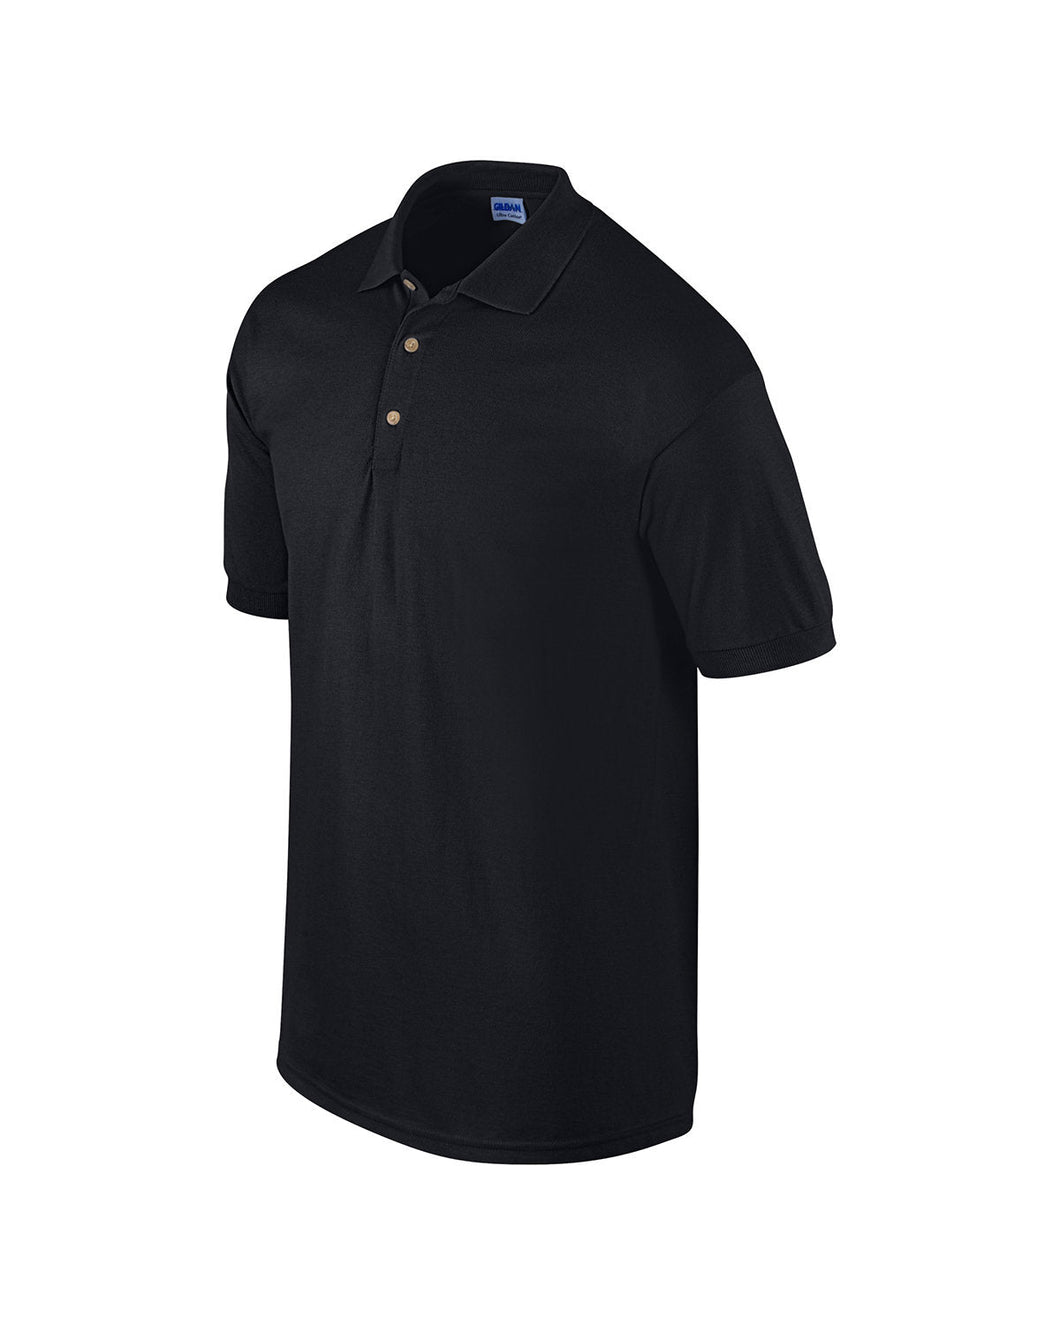 Add Custom Embroidery to Polo Cotton Shirts, Uniform Shirts, School Shirts